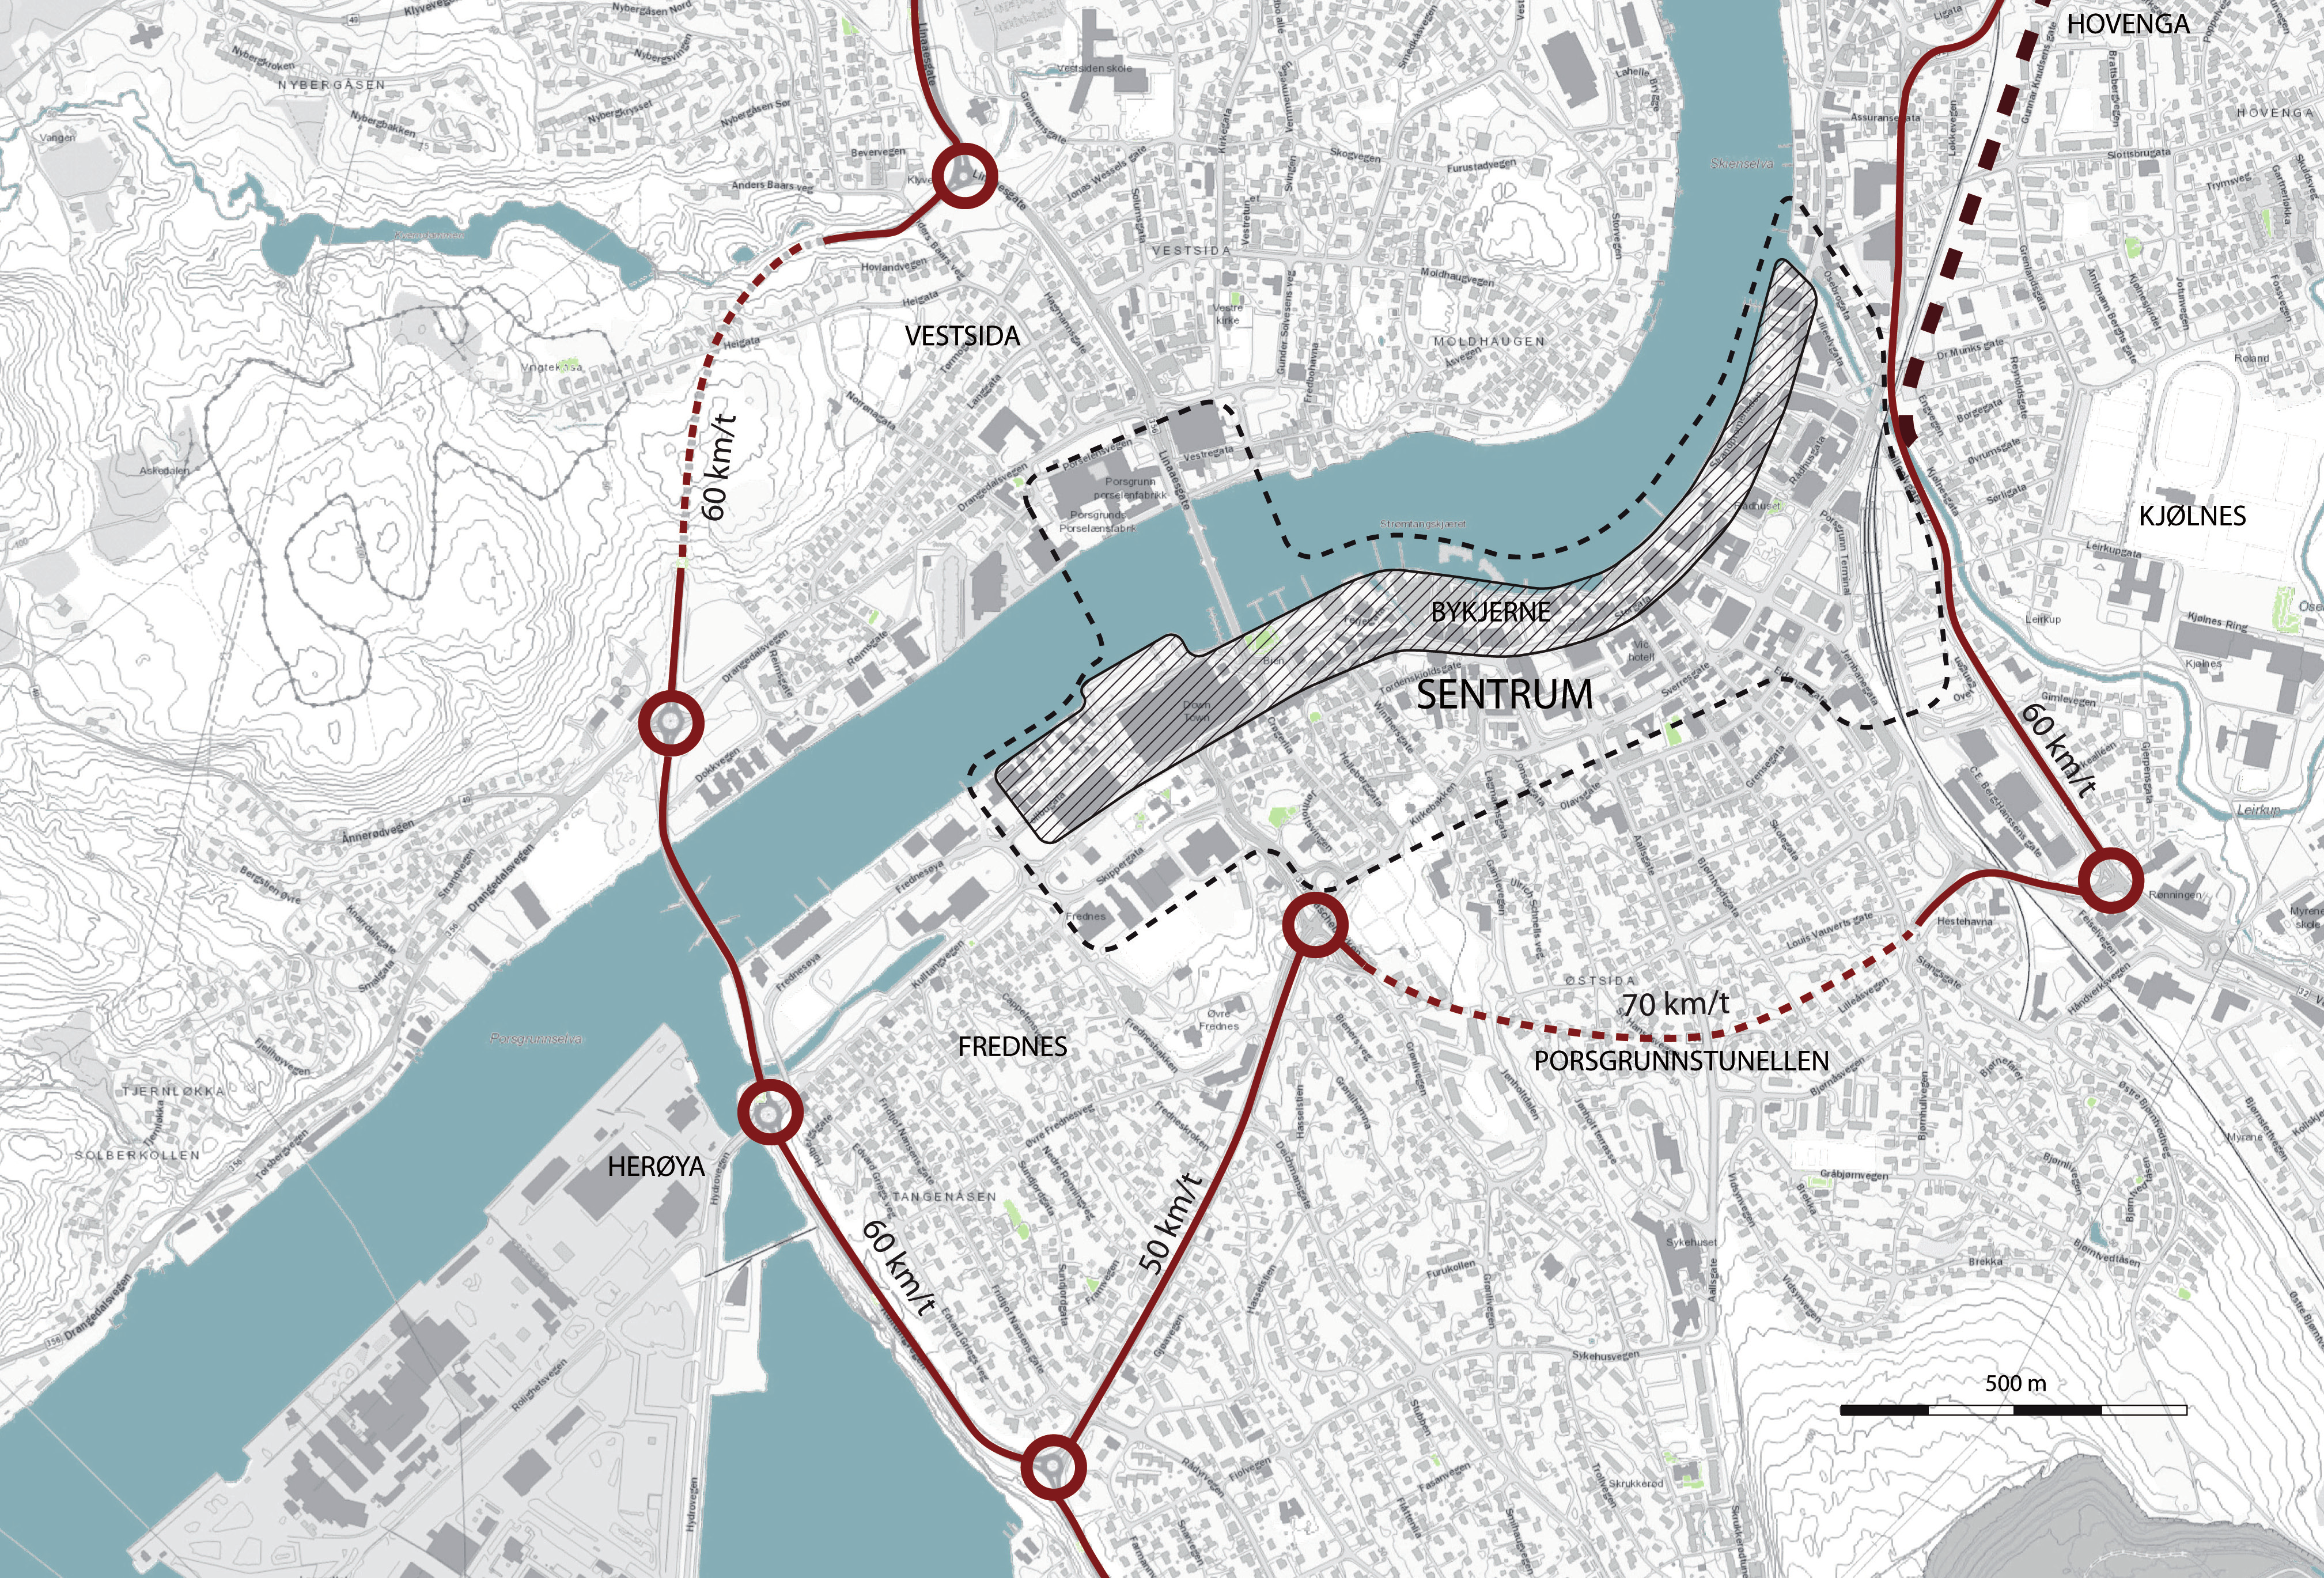 Signatur kart Ringvei Ringvei tunnel Fremtidig veitrasé Trafikalt knutepunkt Sentrum Bykjerne Kart som viser